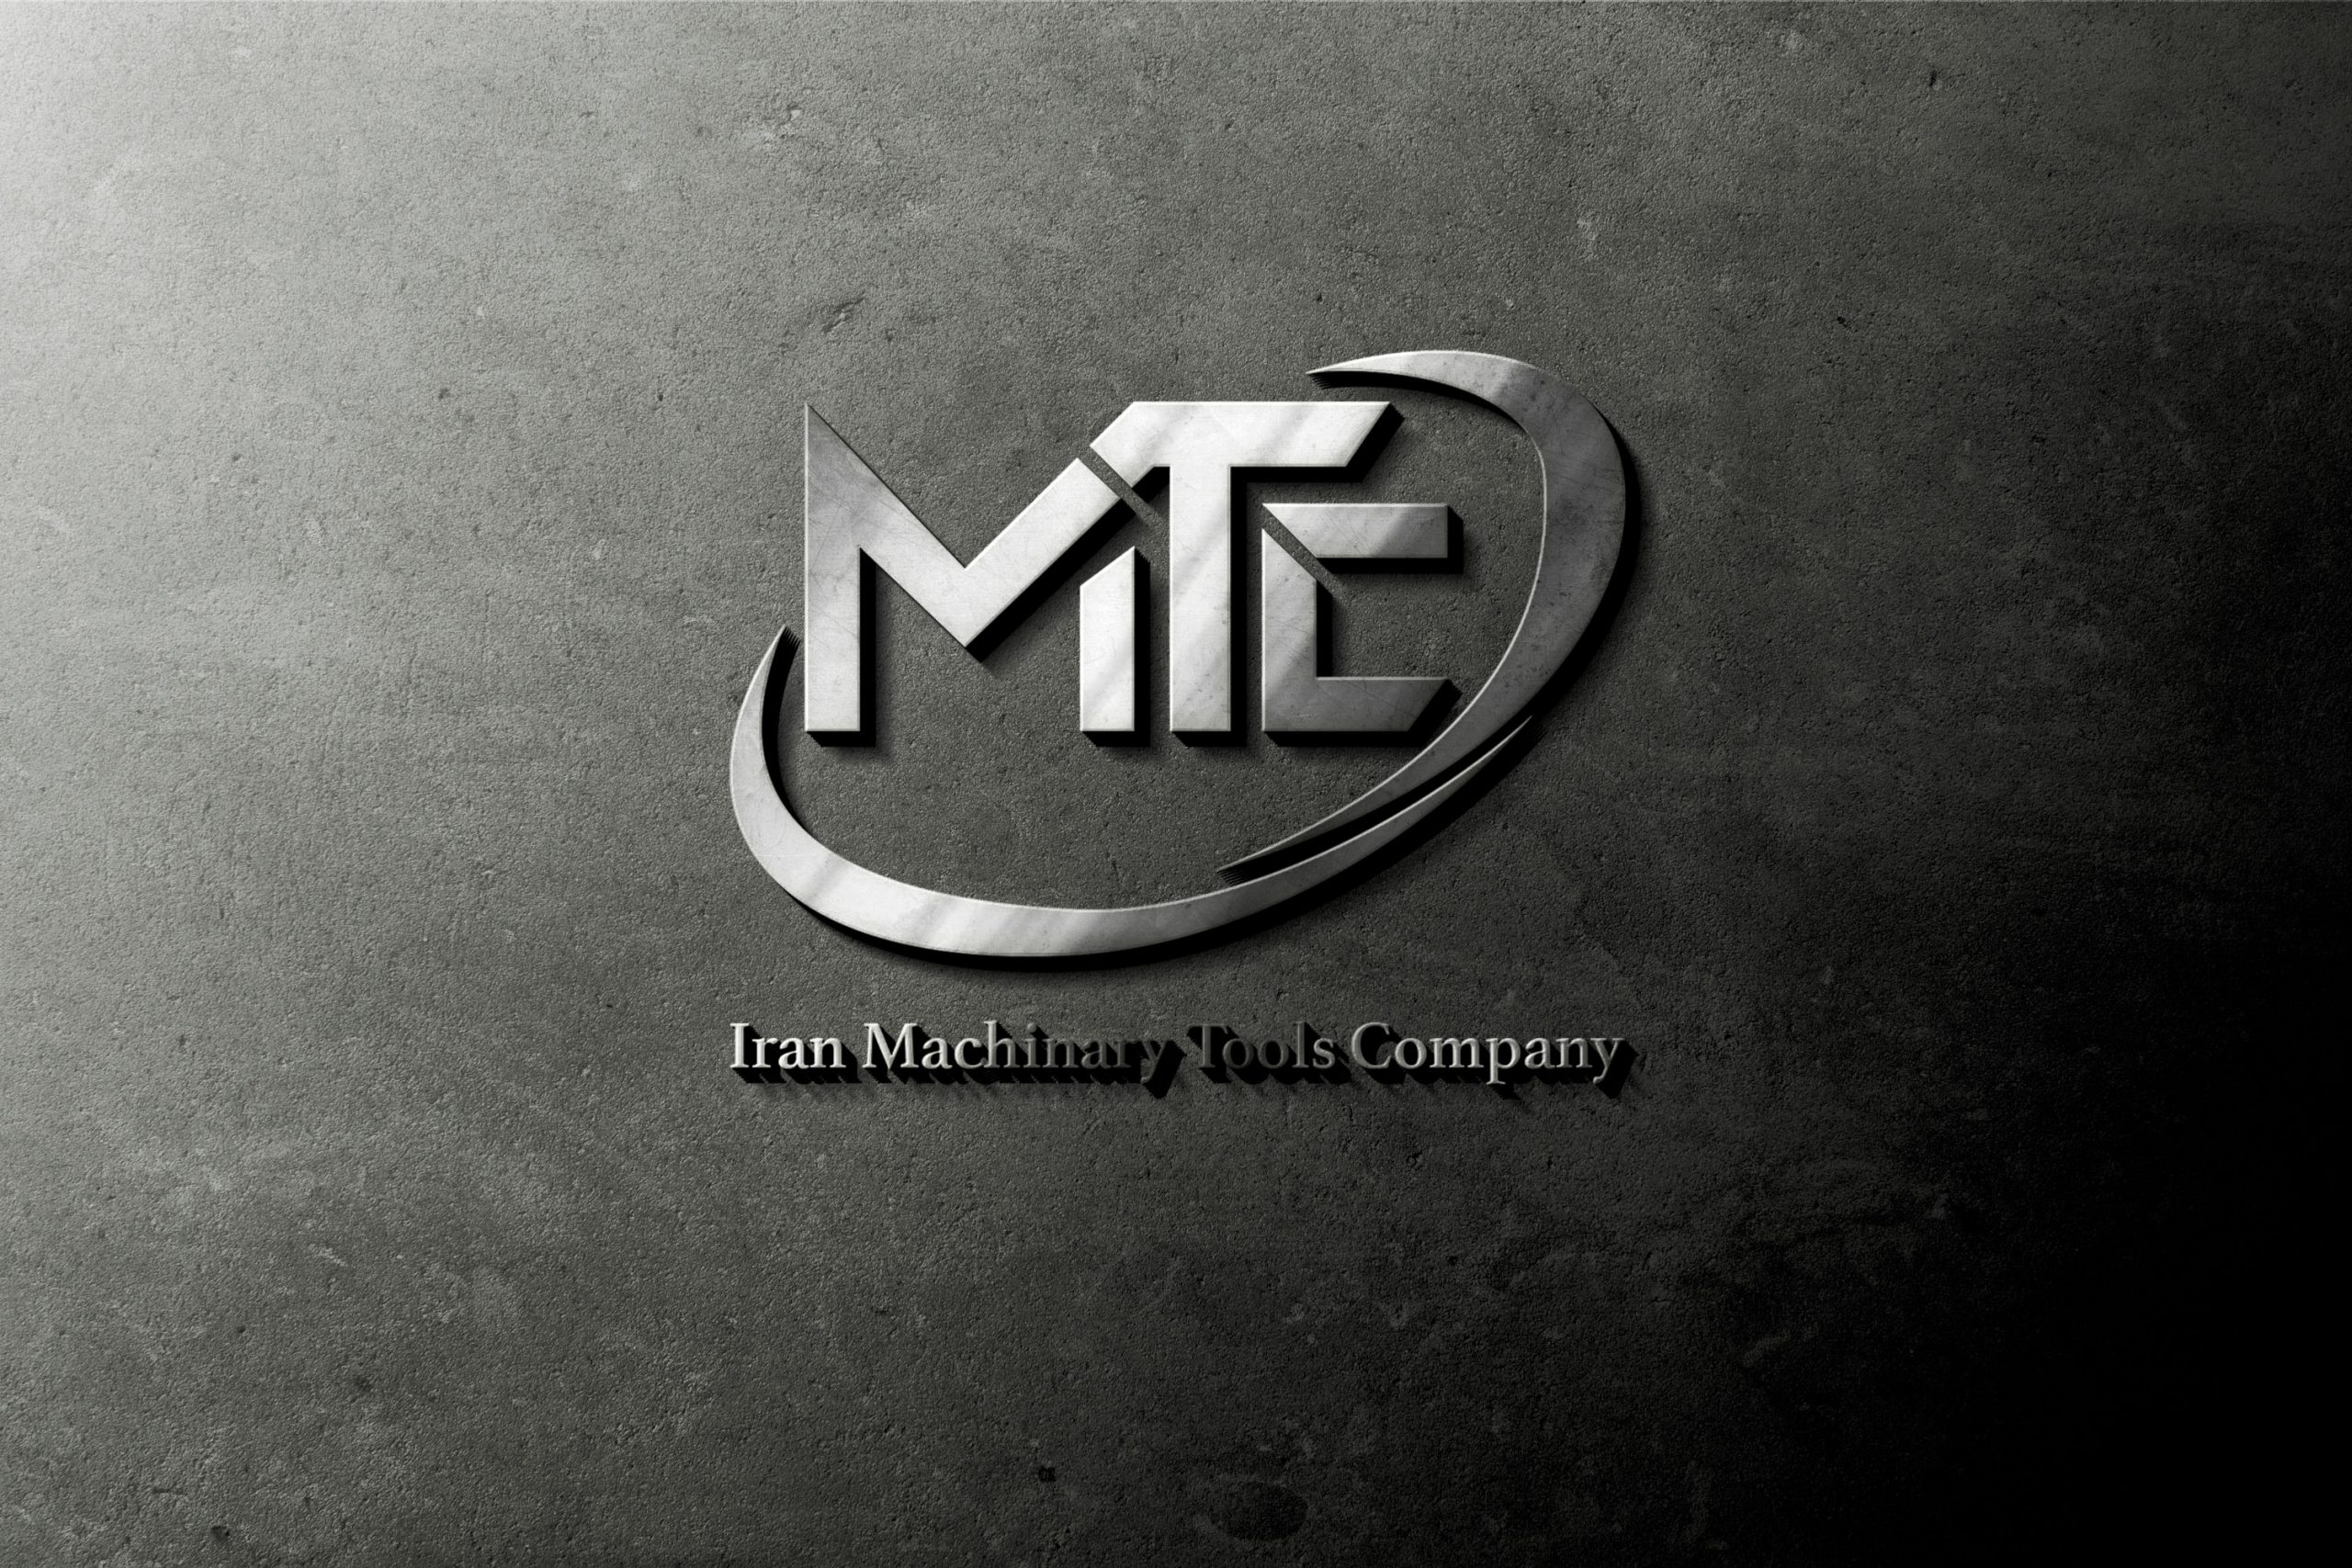 Iran Machinery Tools Company